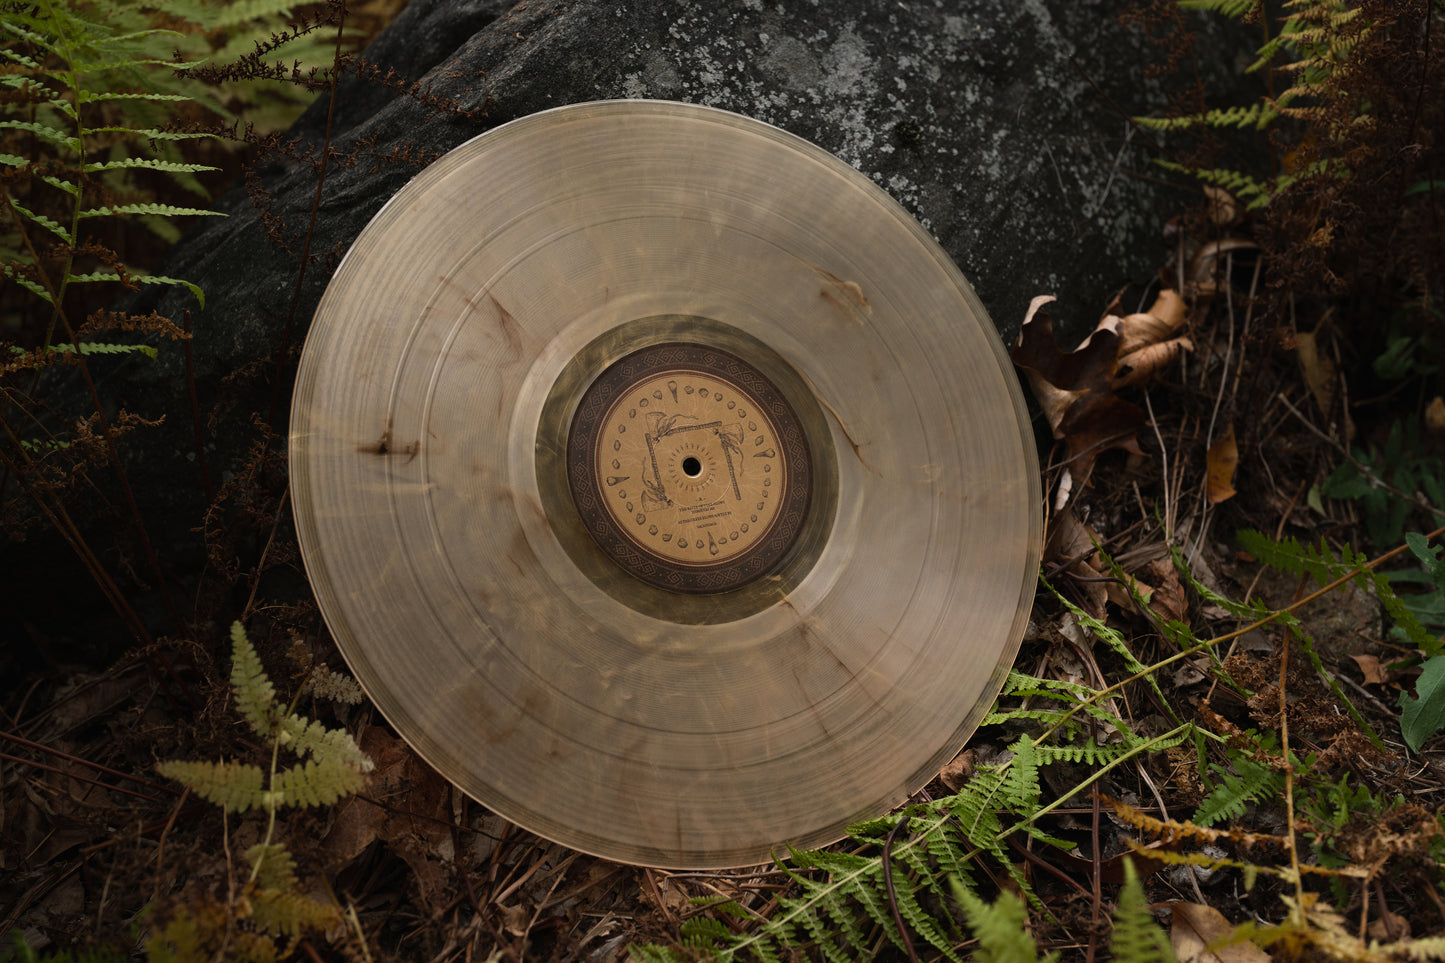 Blackbraid I: Limited Deluxe Gatefold Vinyl, "GHOSTDANCE" Edition